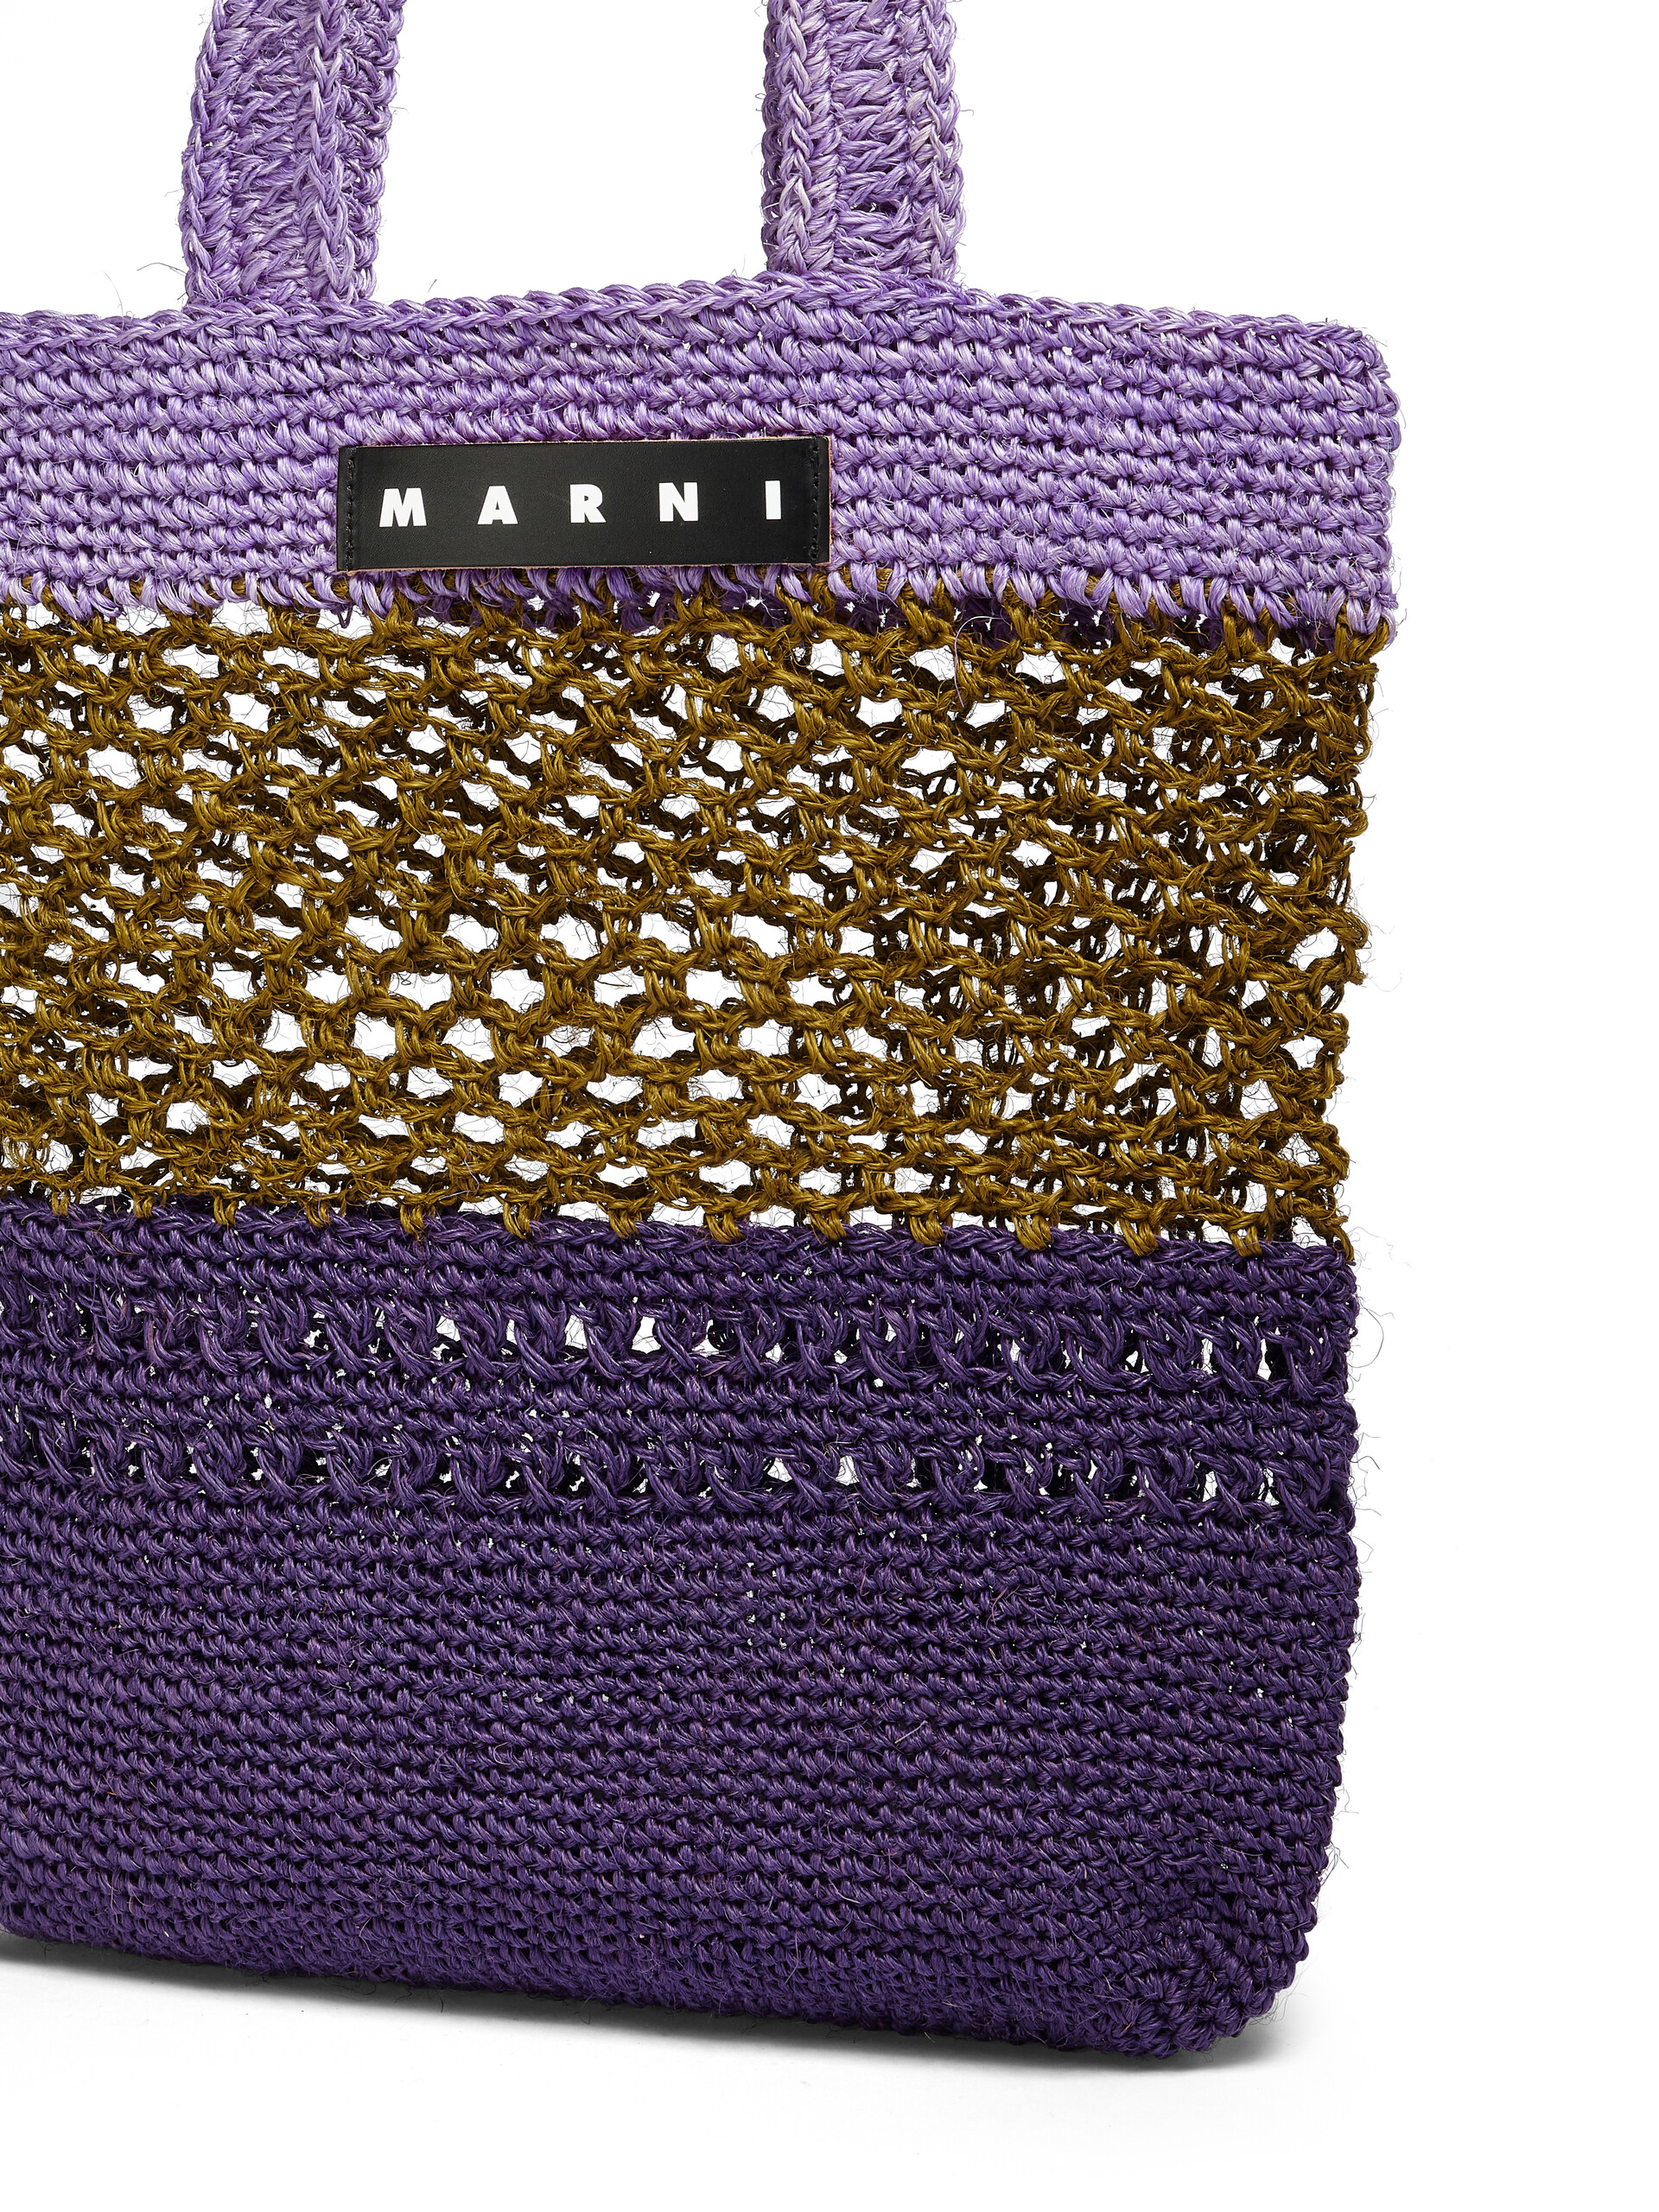 MARNI MARKET bag in purple and green natural fiber - Bags - Image 4